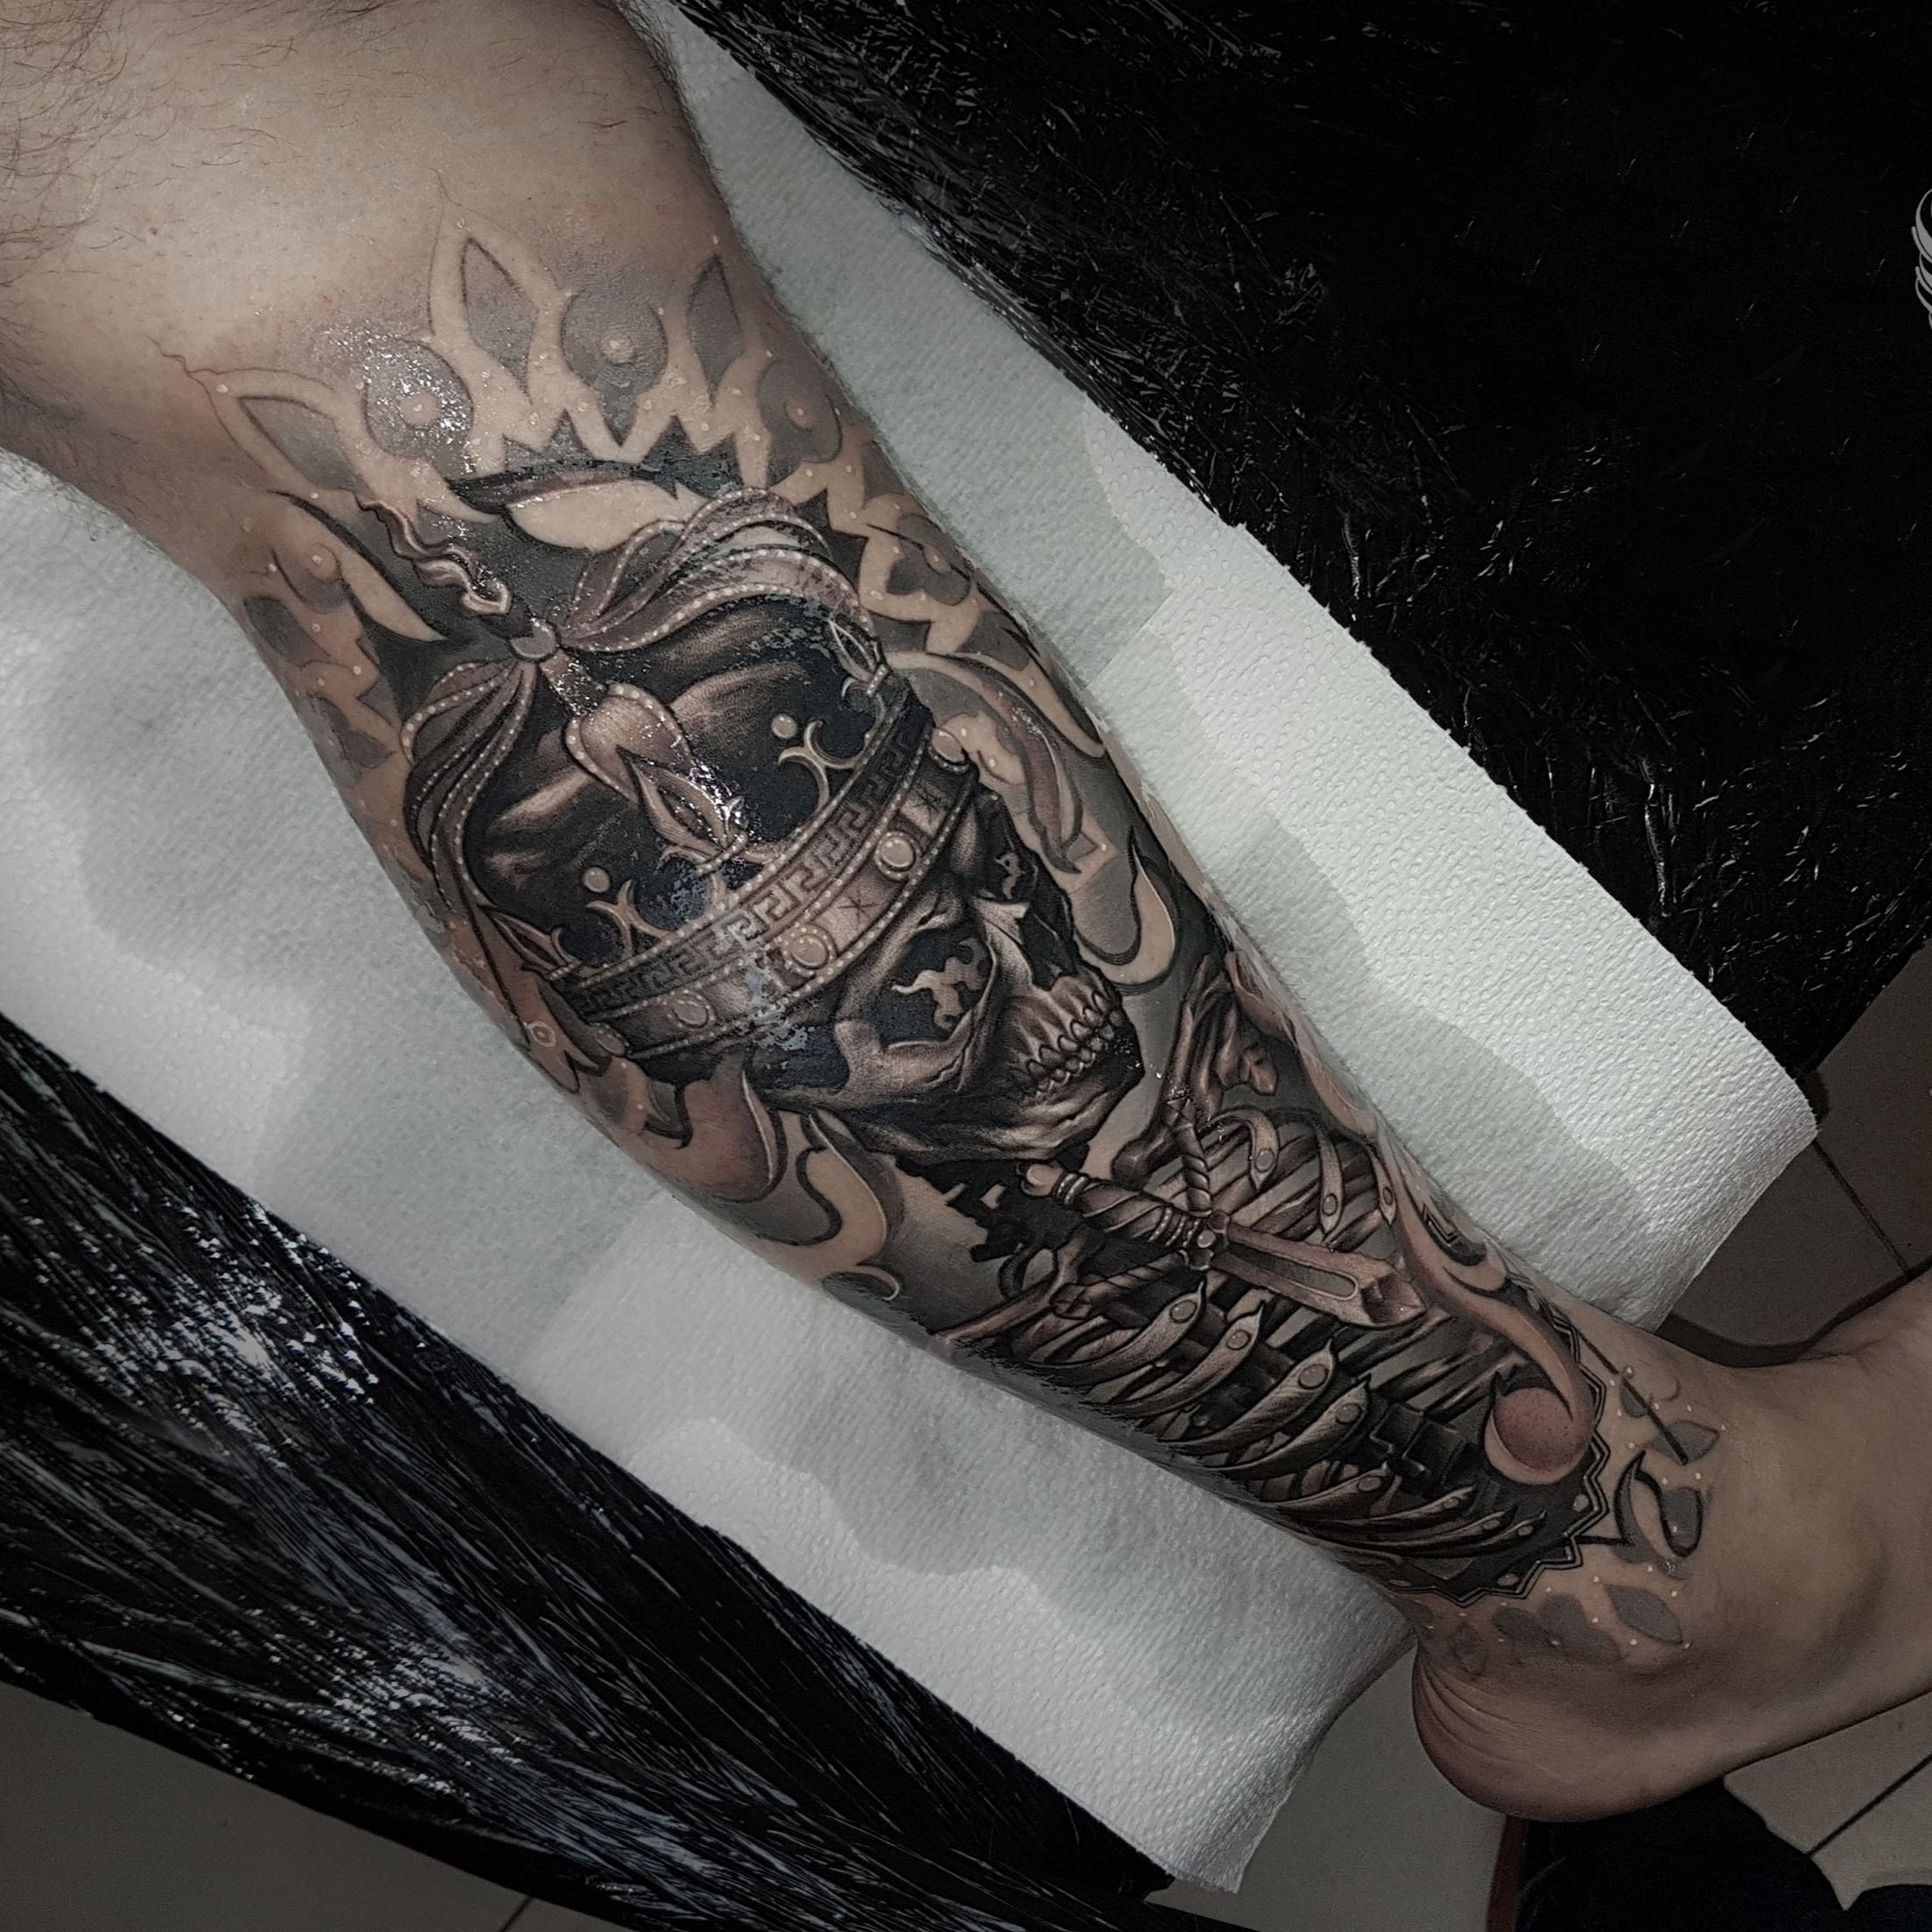 Skin City Tattoo on Twitter skull king crown design tattoo idea  SkulltattooBA TattooArtistNY WuTangOfficial LovinDublin GameOfThrones  BestInks httpstcoKILnLyXbNF  Twitter